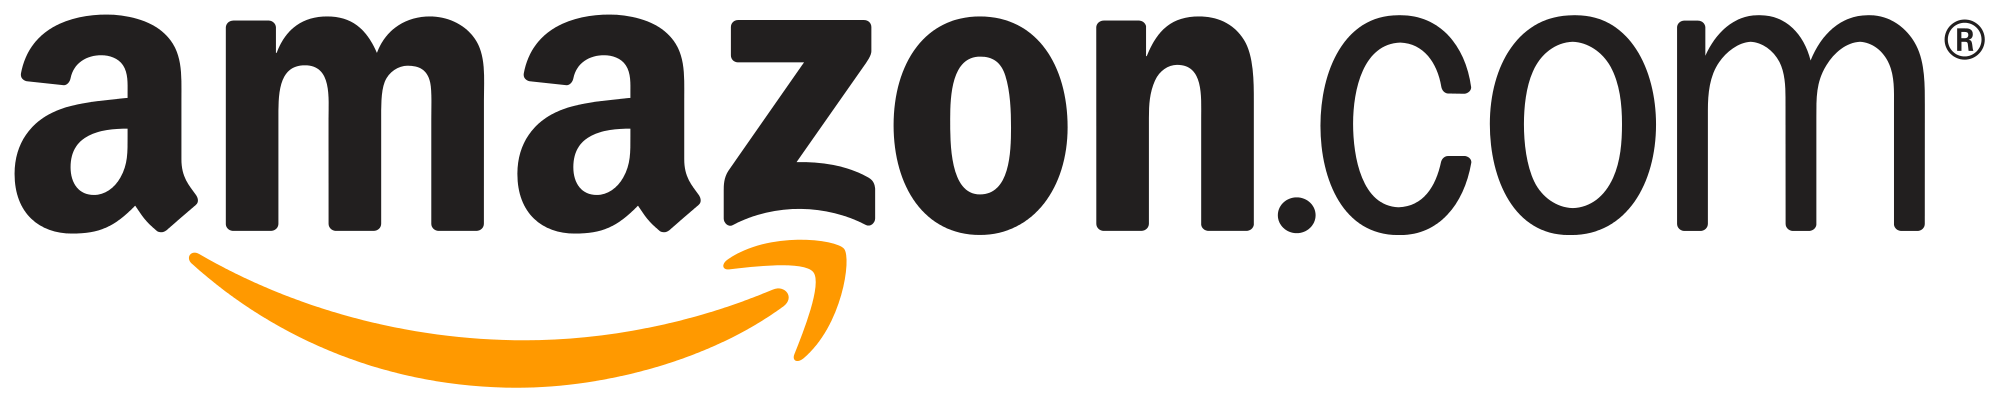 Amazon Books Logo - Amazon.com Logo | LOGOSURFER.COM